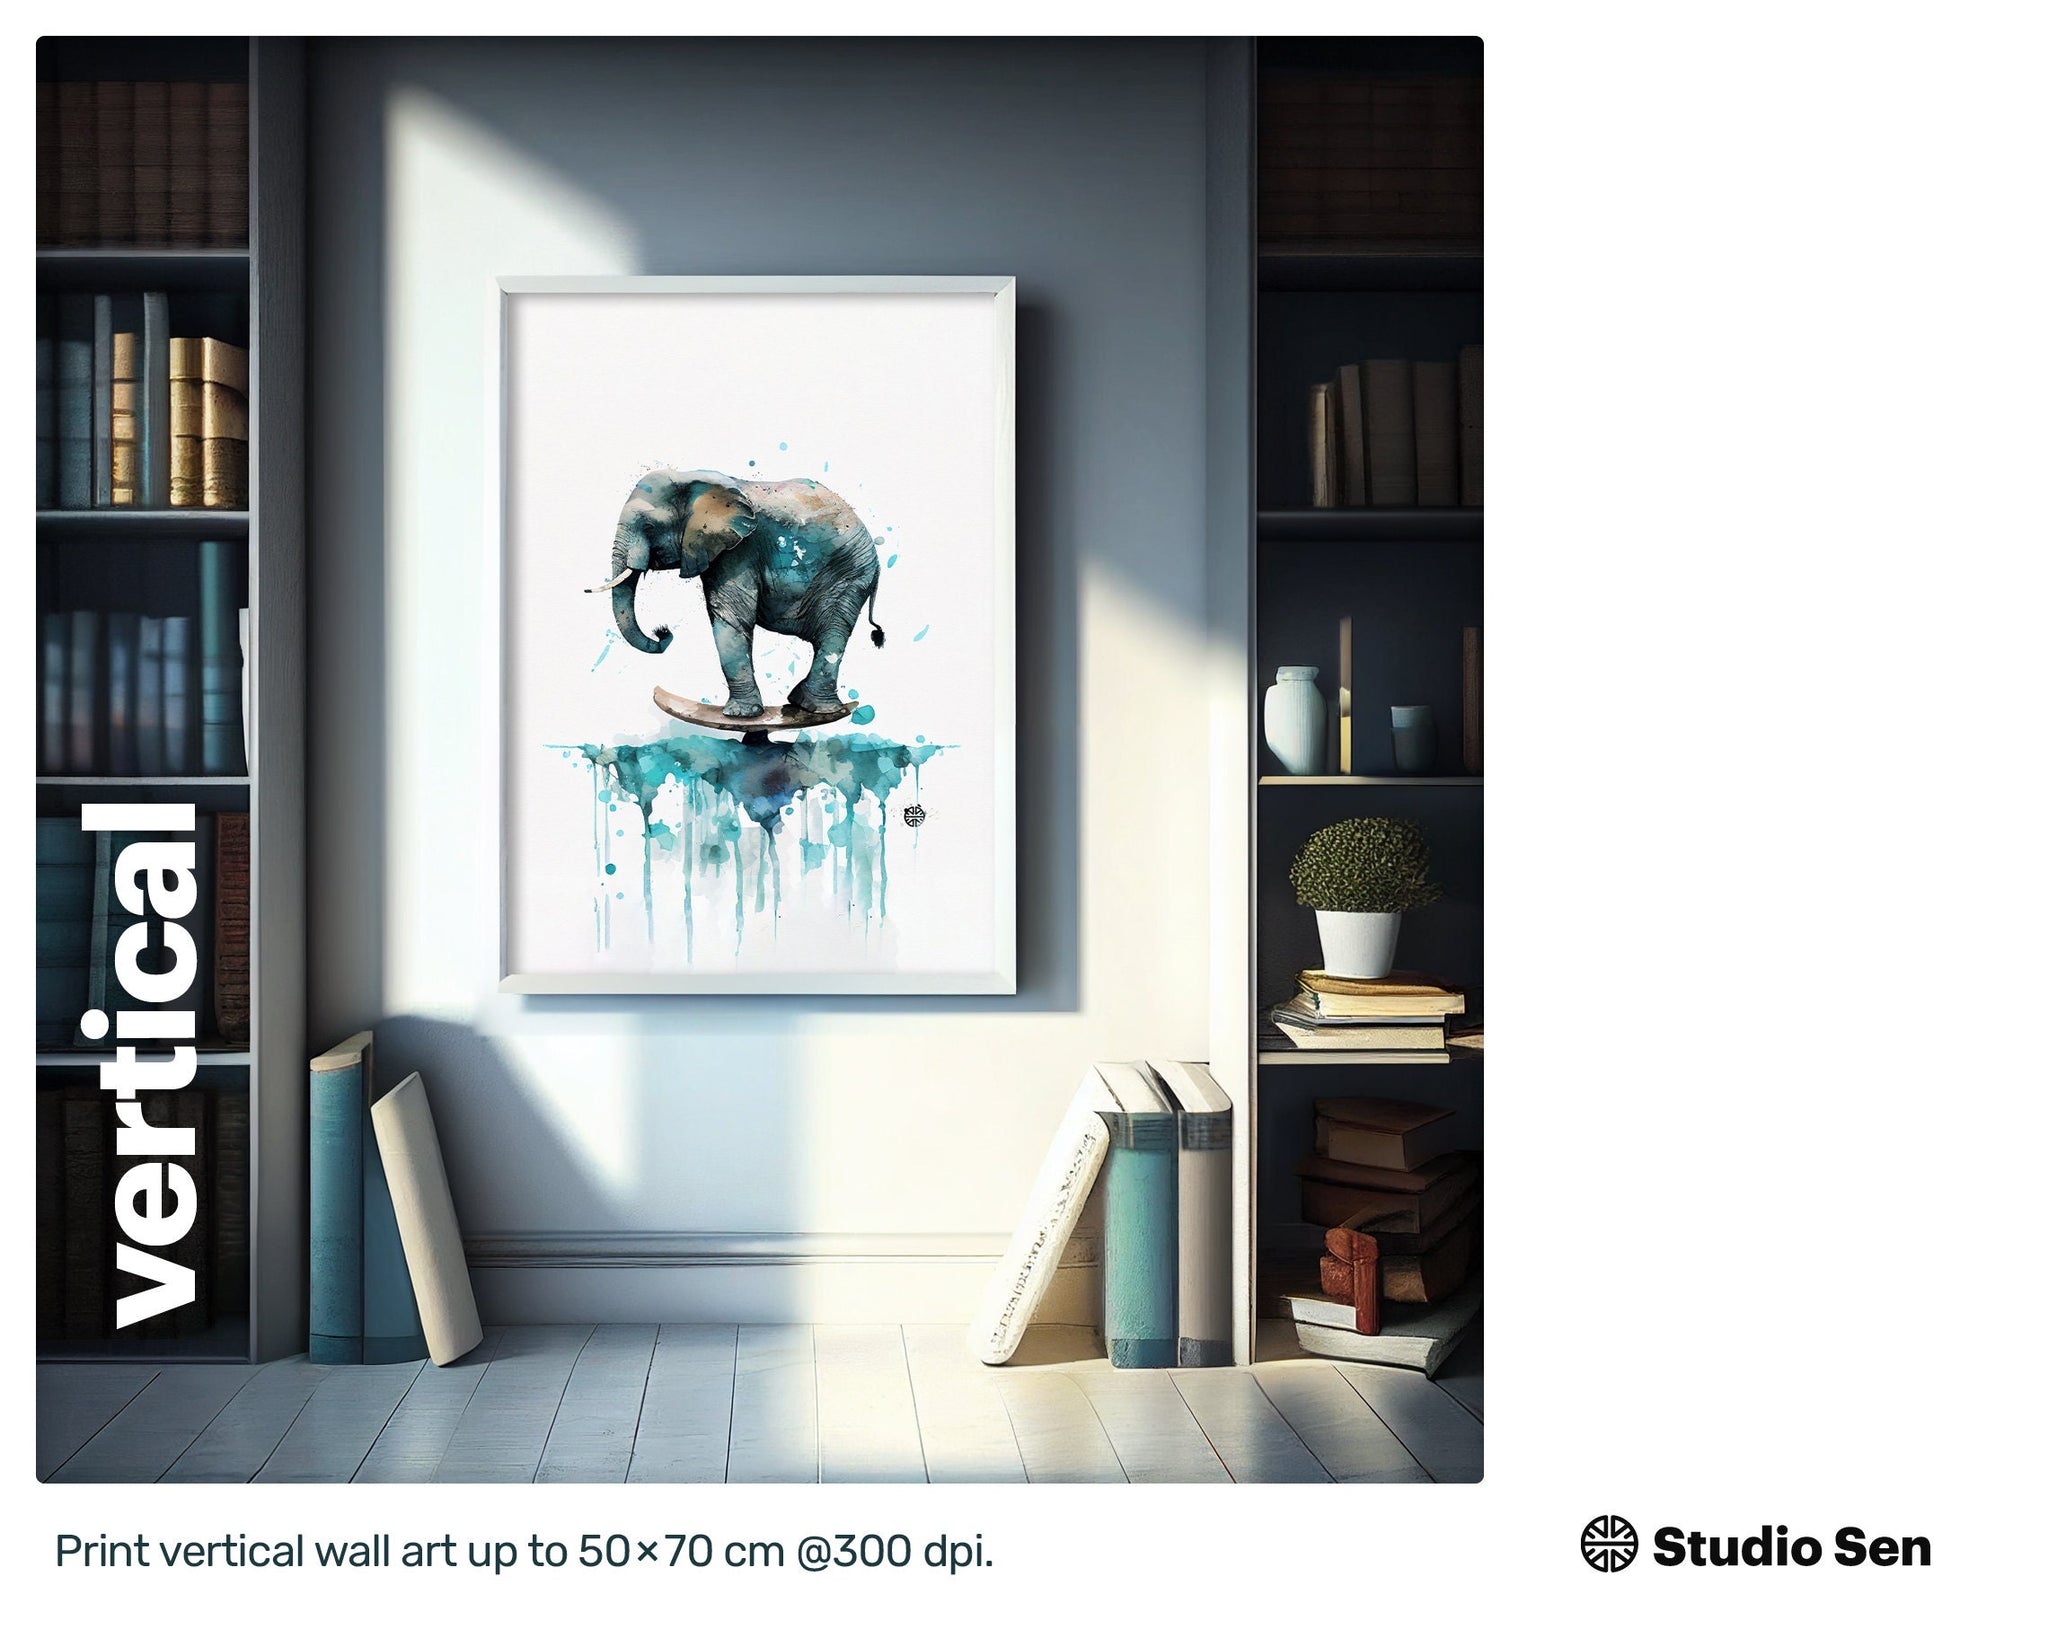 Yoga Elephant, Gift for kids, Printable Wall Art, Digital Download Print, drops and splashes